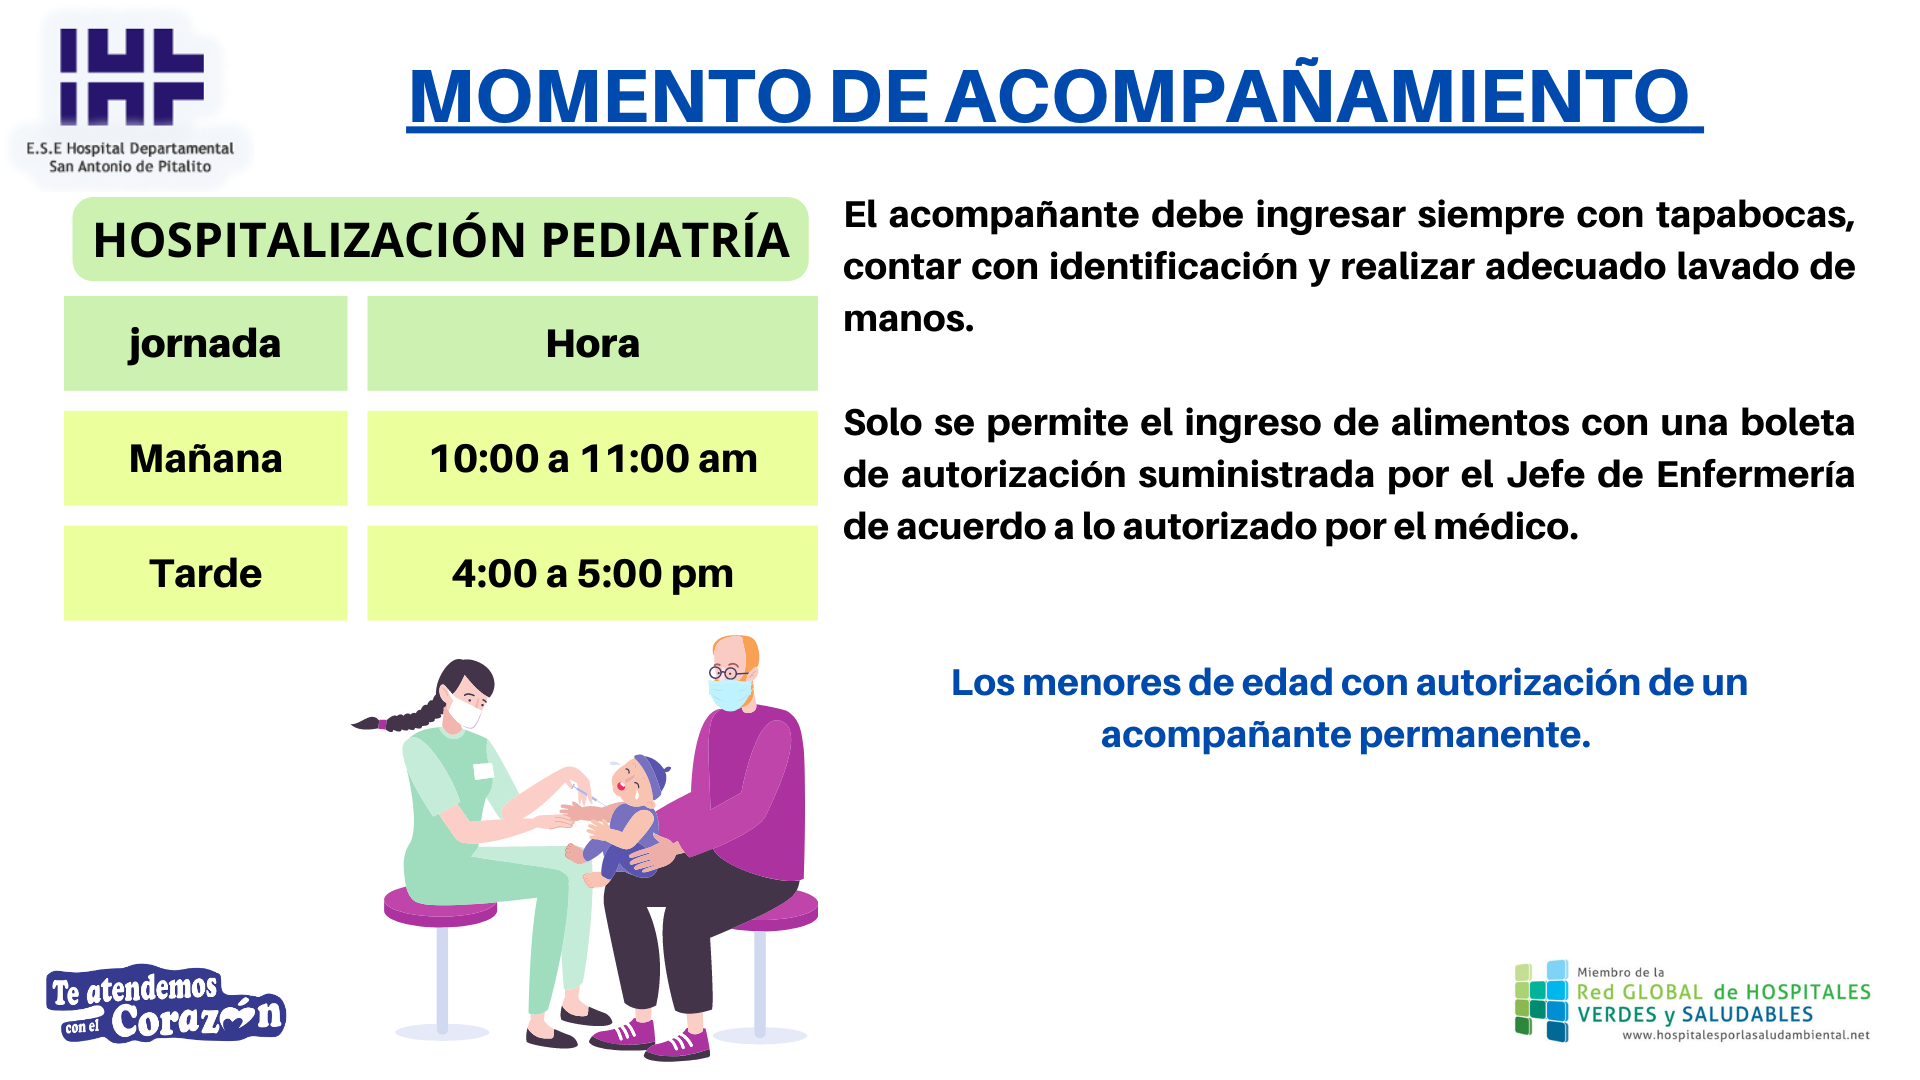 Momentos De Acompañamiento Hospitalización Pediatría